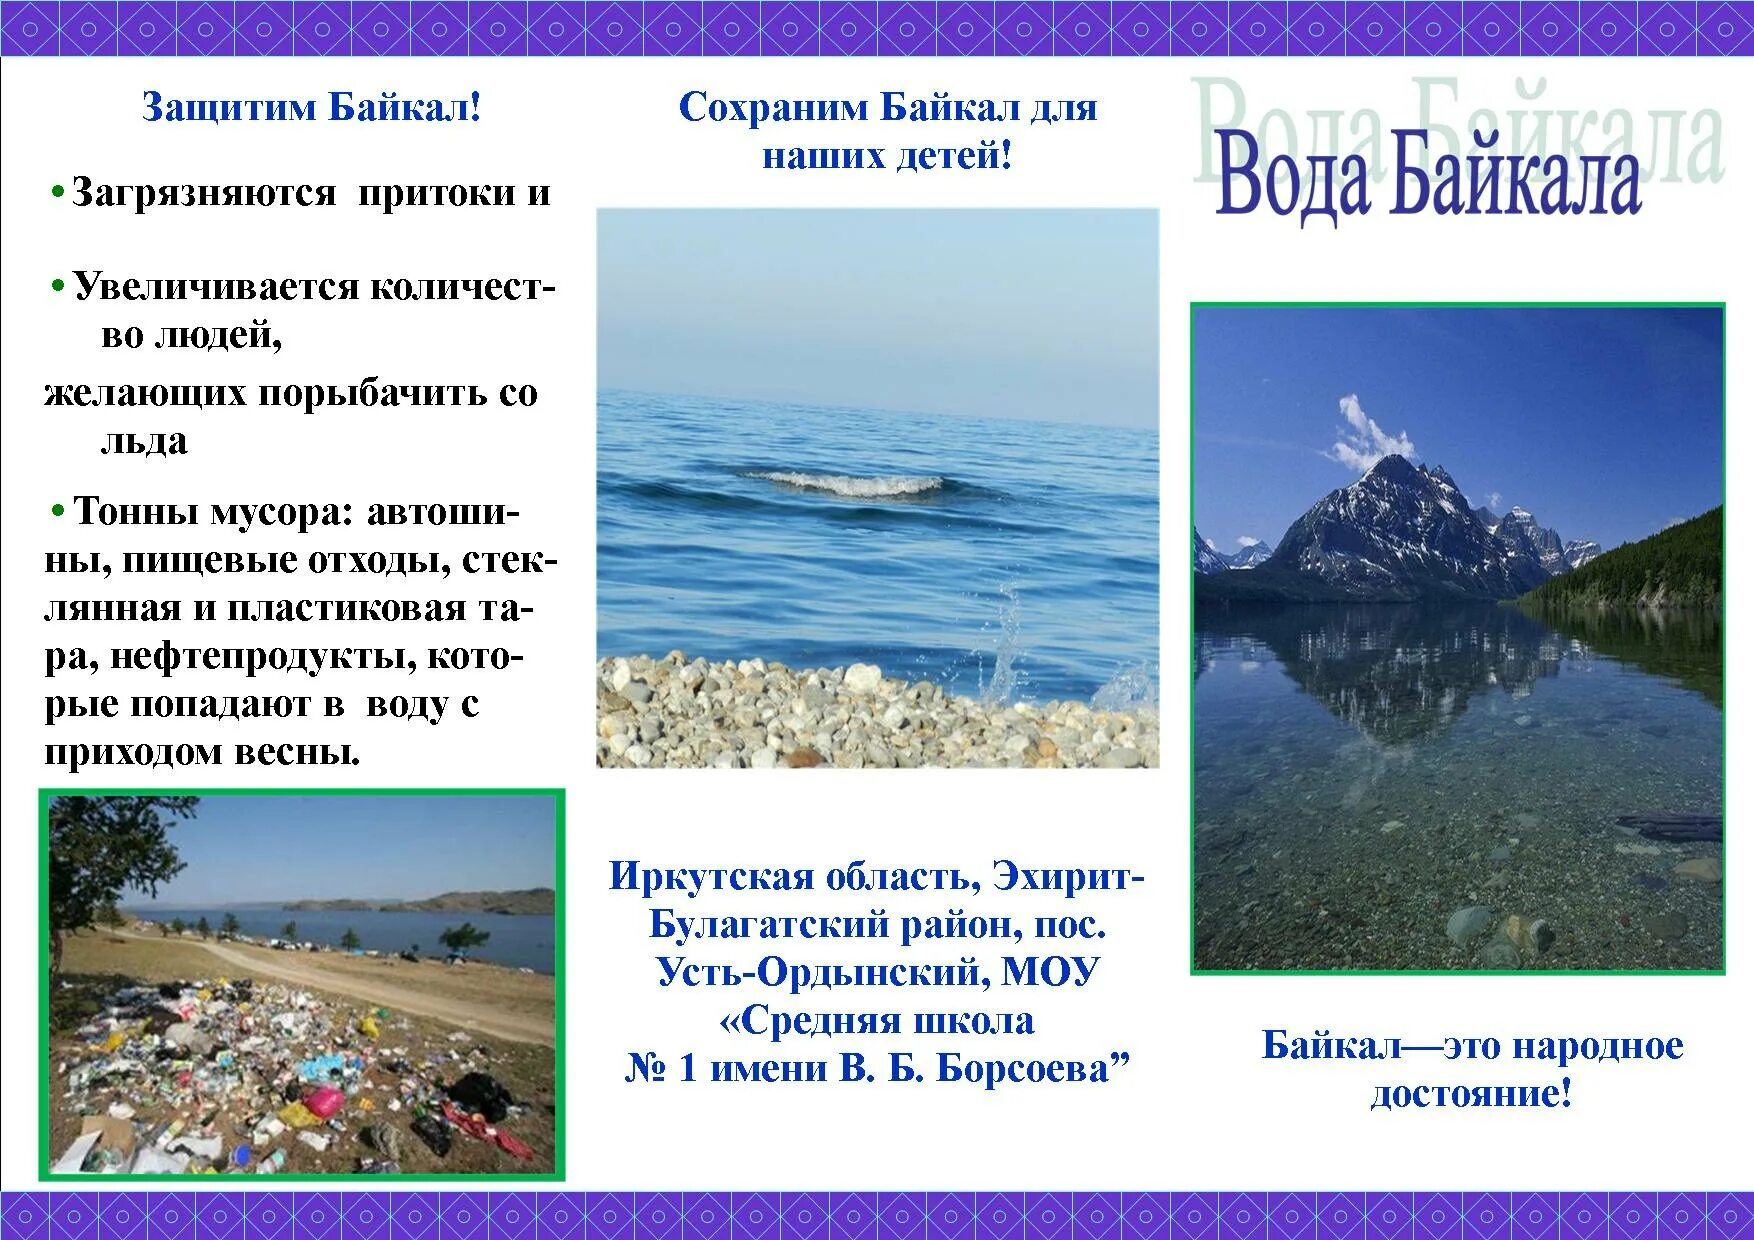 Почему байкал такой чистый. Брошюра озеро Байкал. Буклет на тему озеро Байкал. Буклет озеро Байкал. Буклет по озеру Байкал.